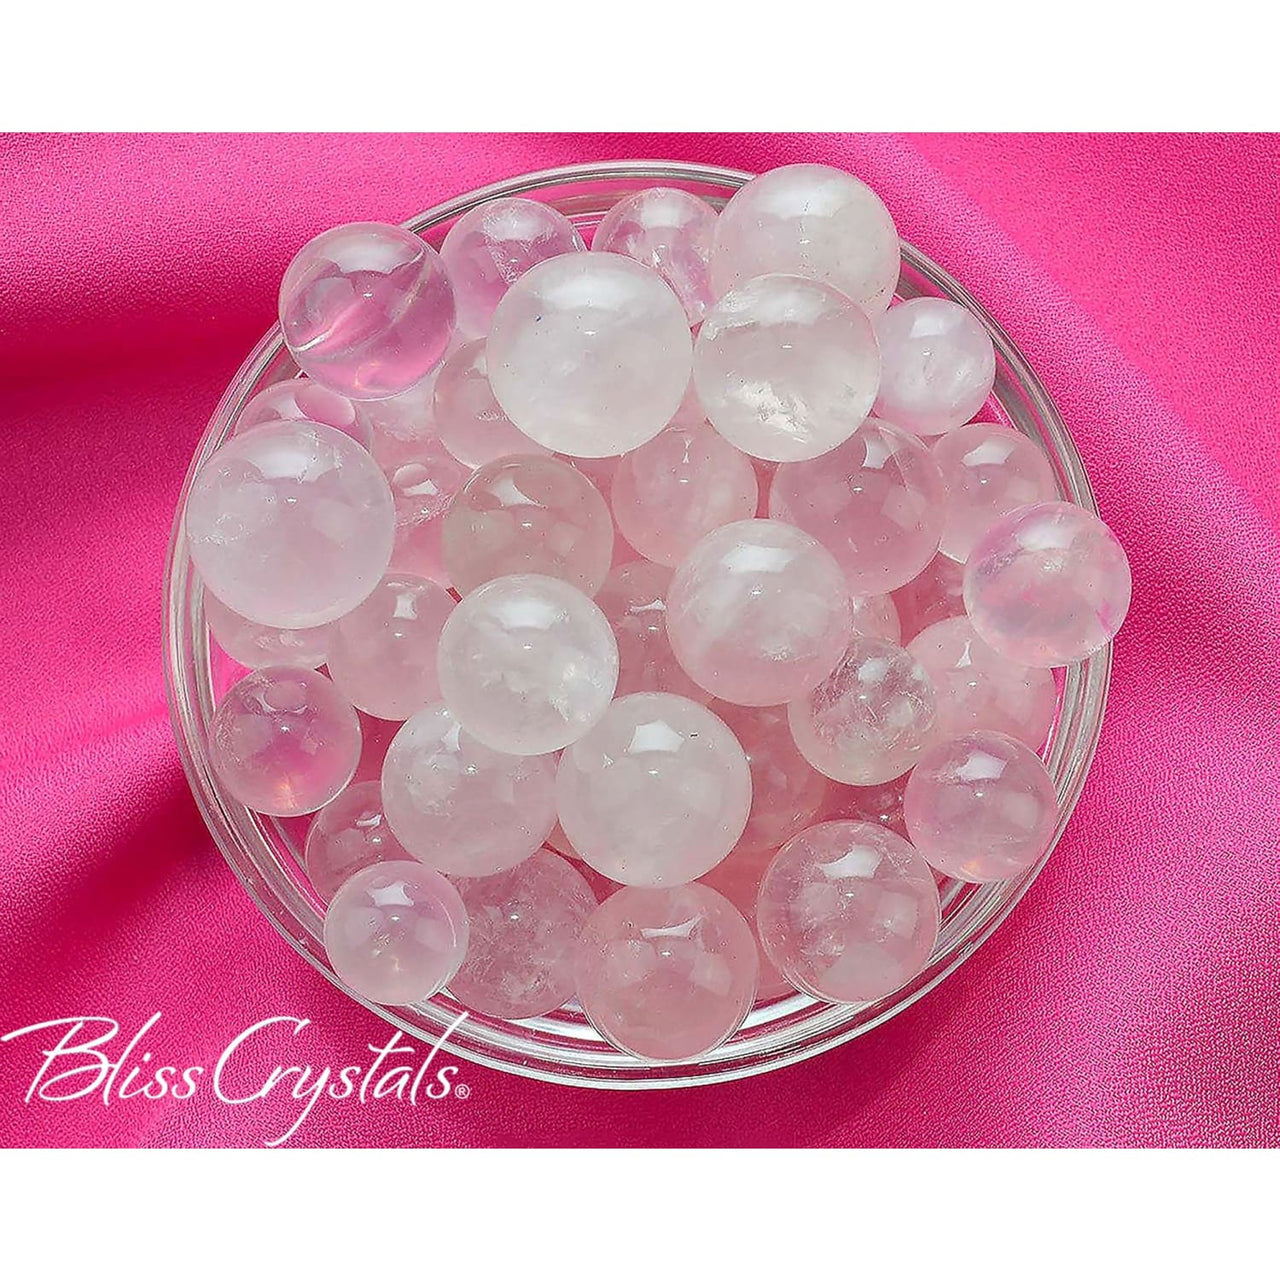 2 ROSE QUARTZ Mini Spheres (hand matched pair) Pink Crystal 